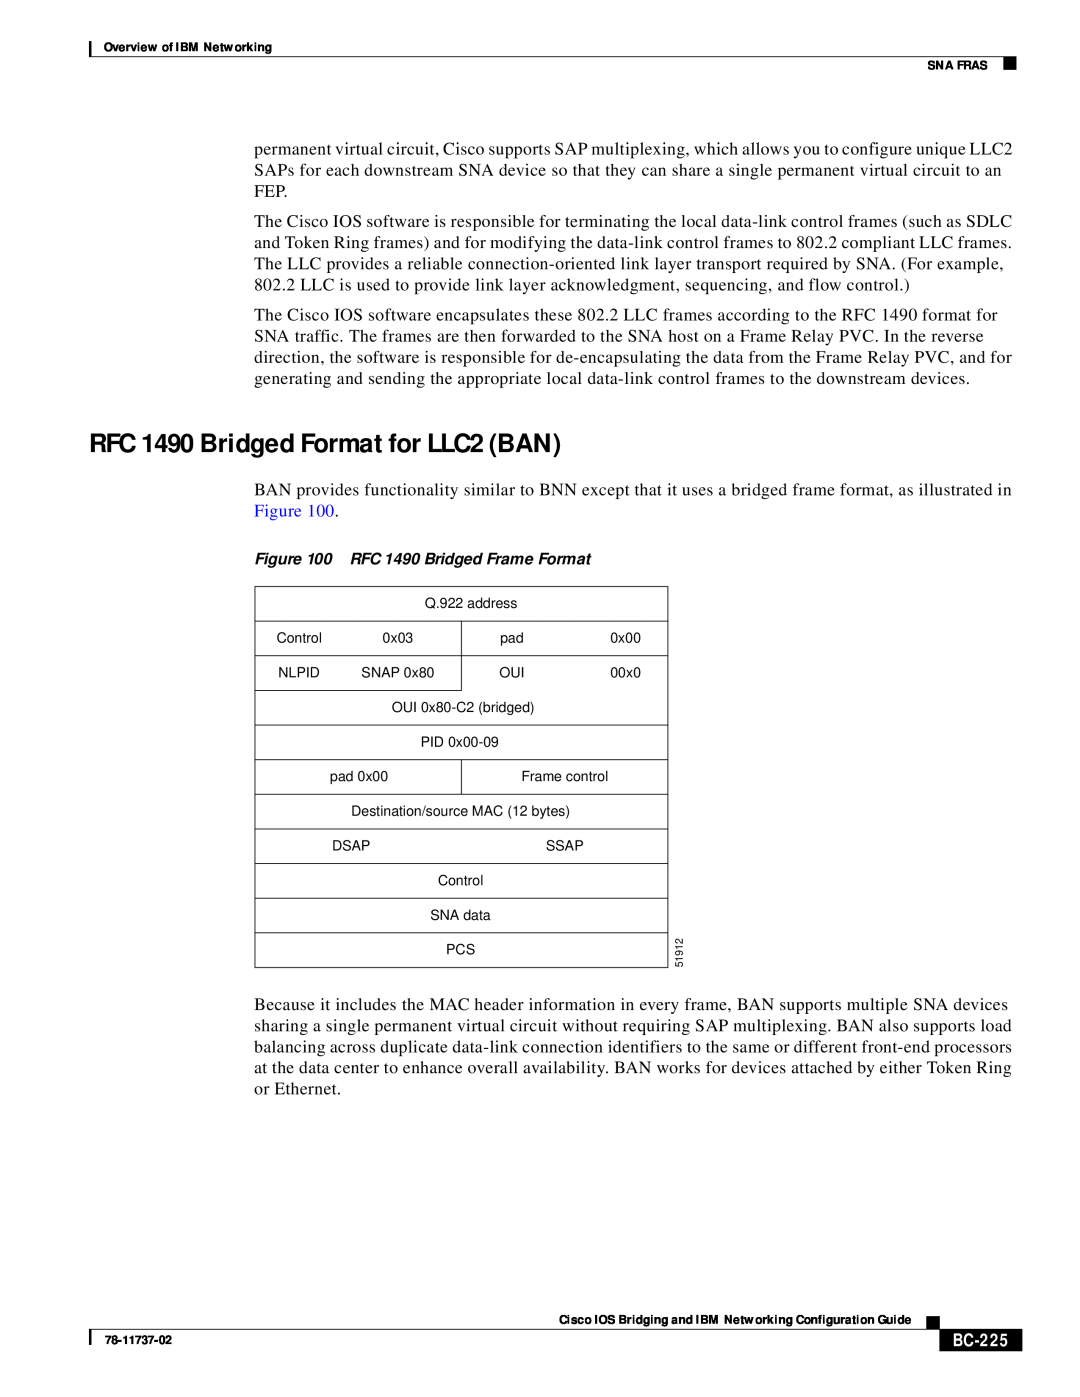 IBM BC-201 manual RFC 1490 Bridged Format for LLC2 BAN, BC-225 